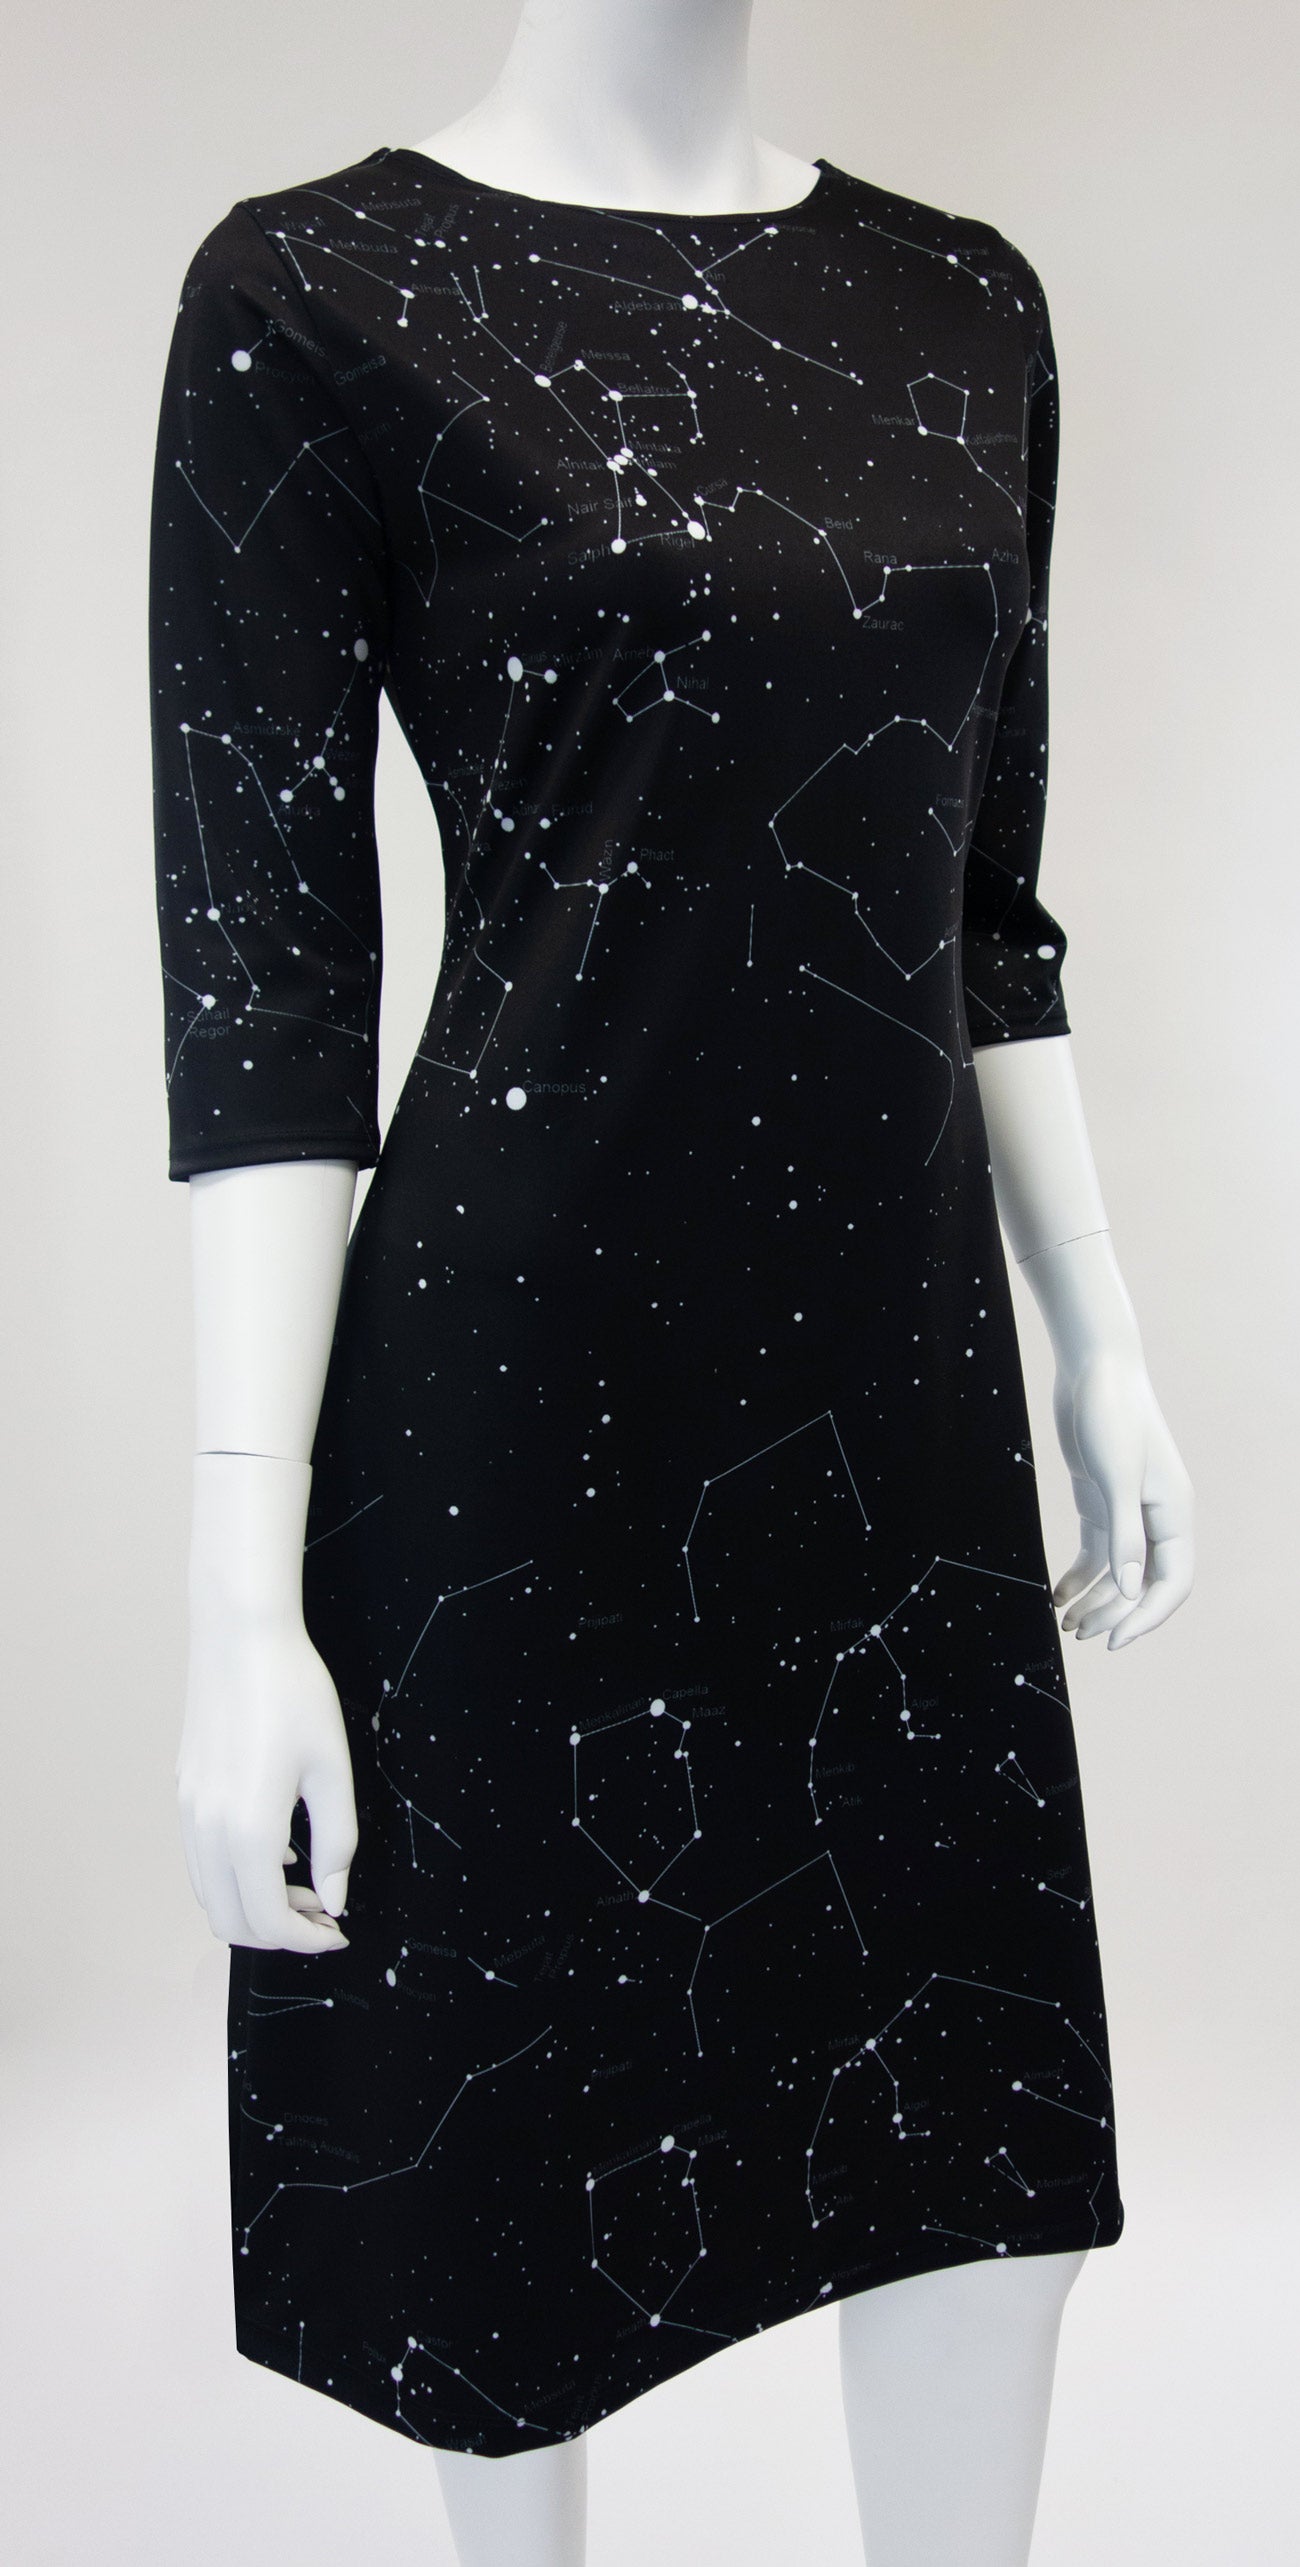 Black Constellation Star Print Dress FRONT